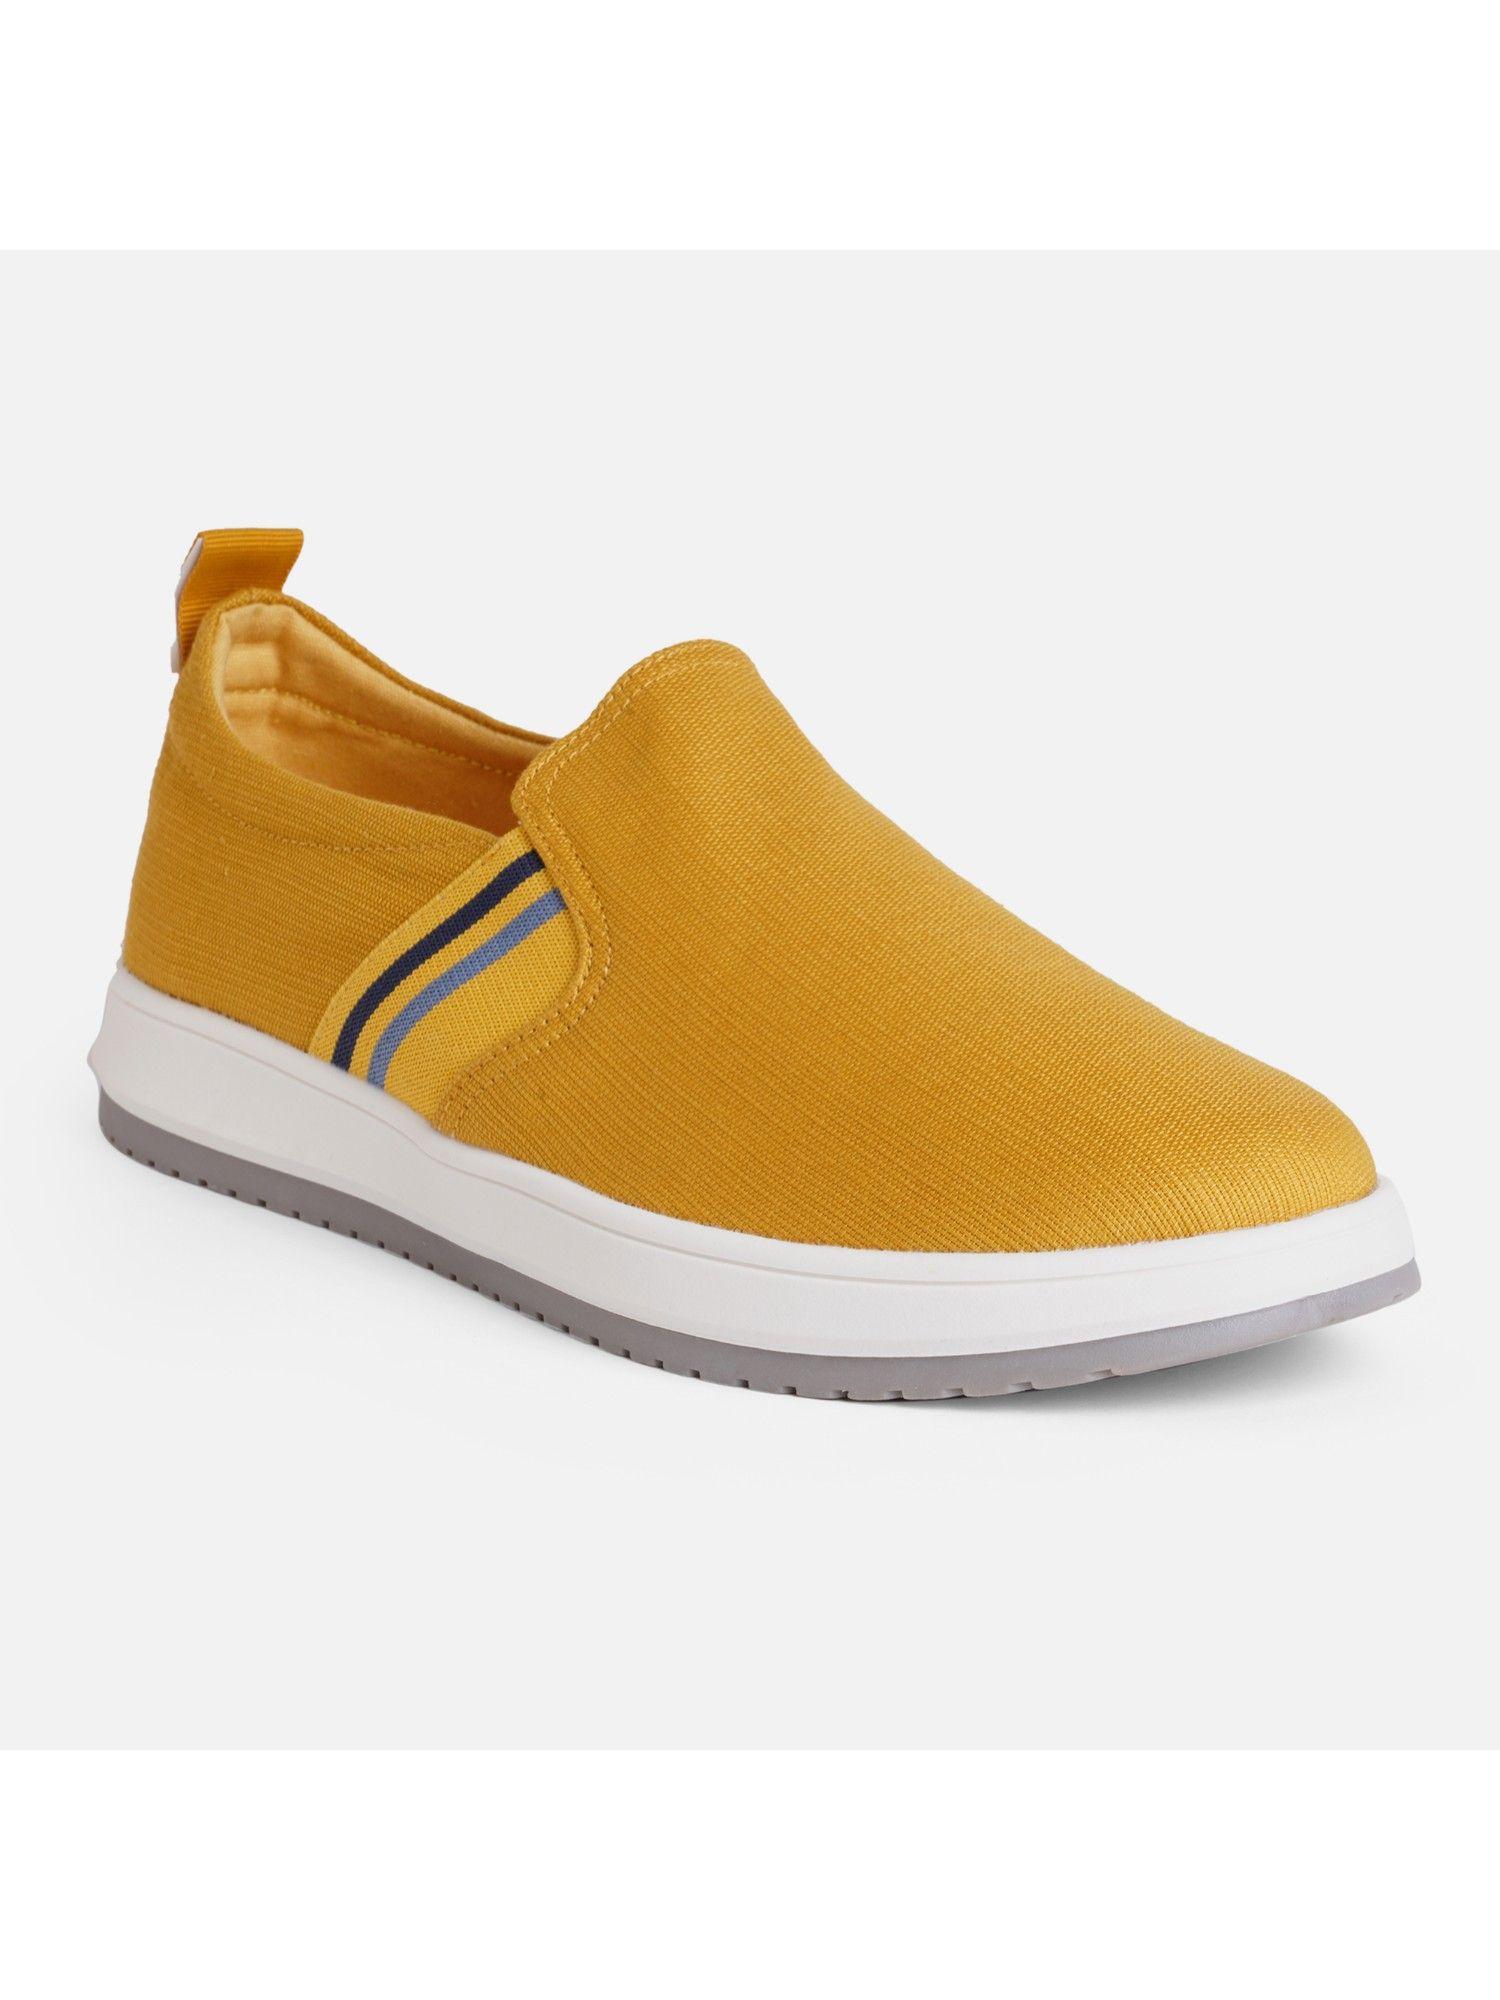 opencourt textile yellow woven shoe slip on